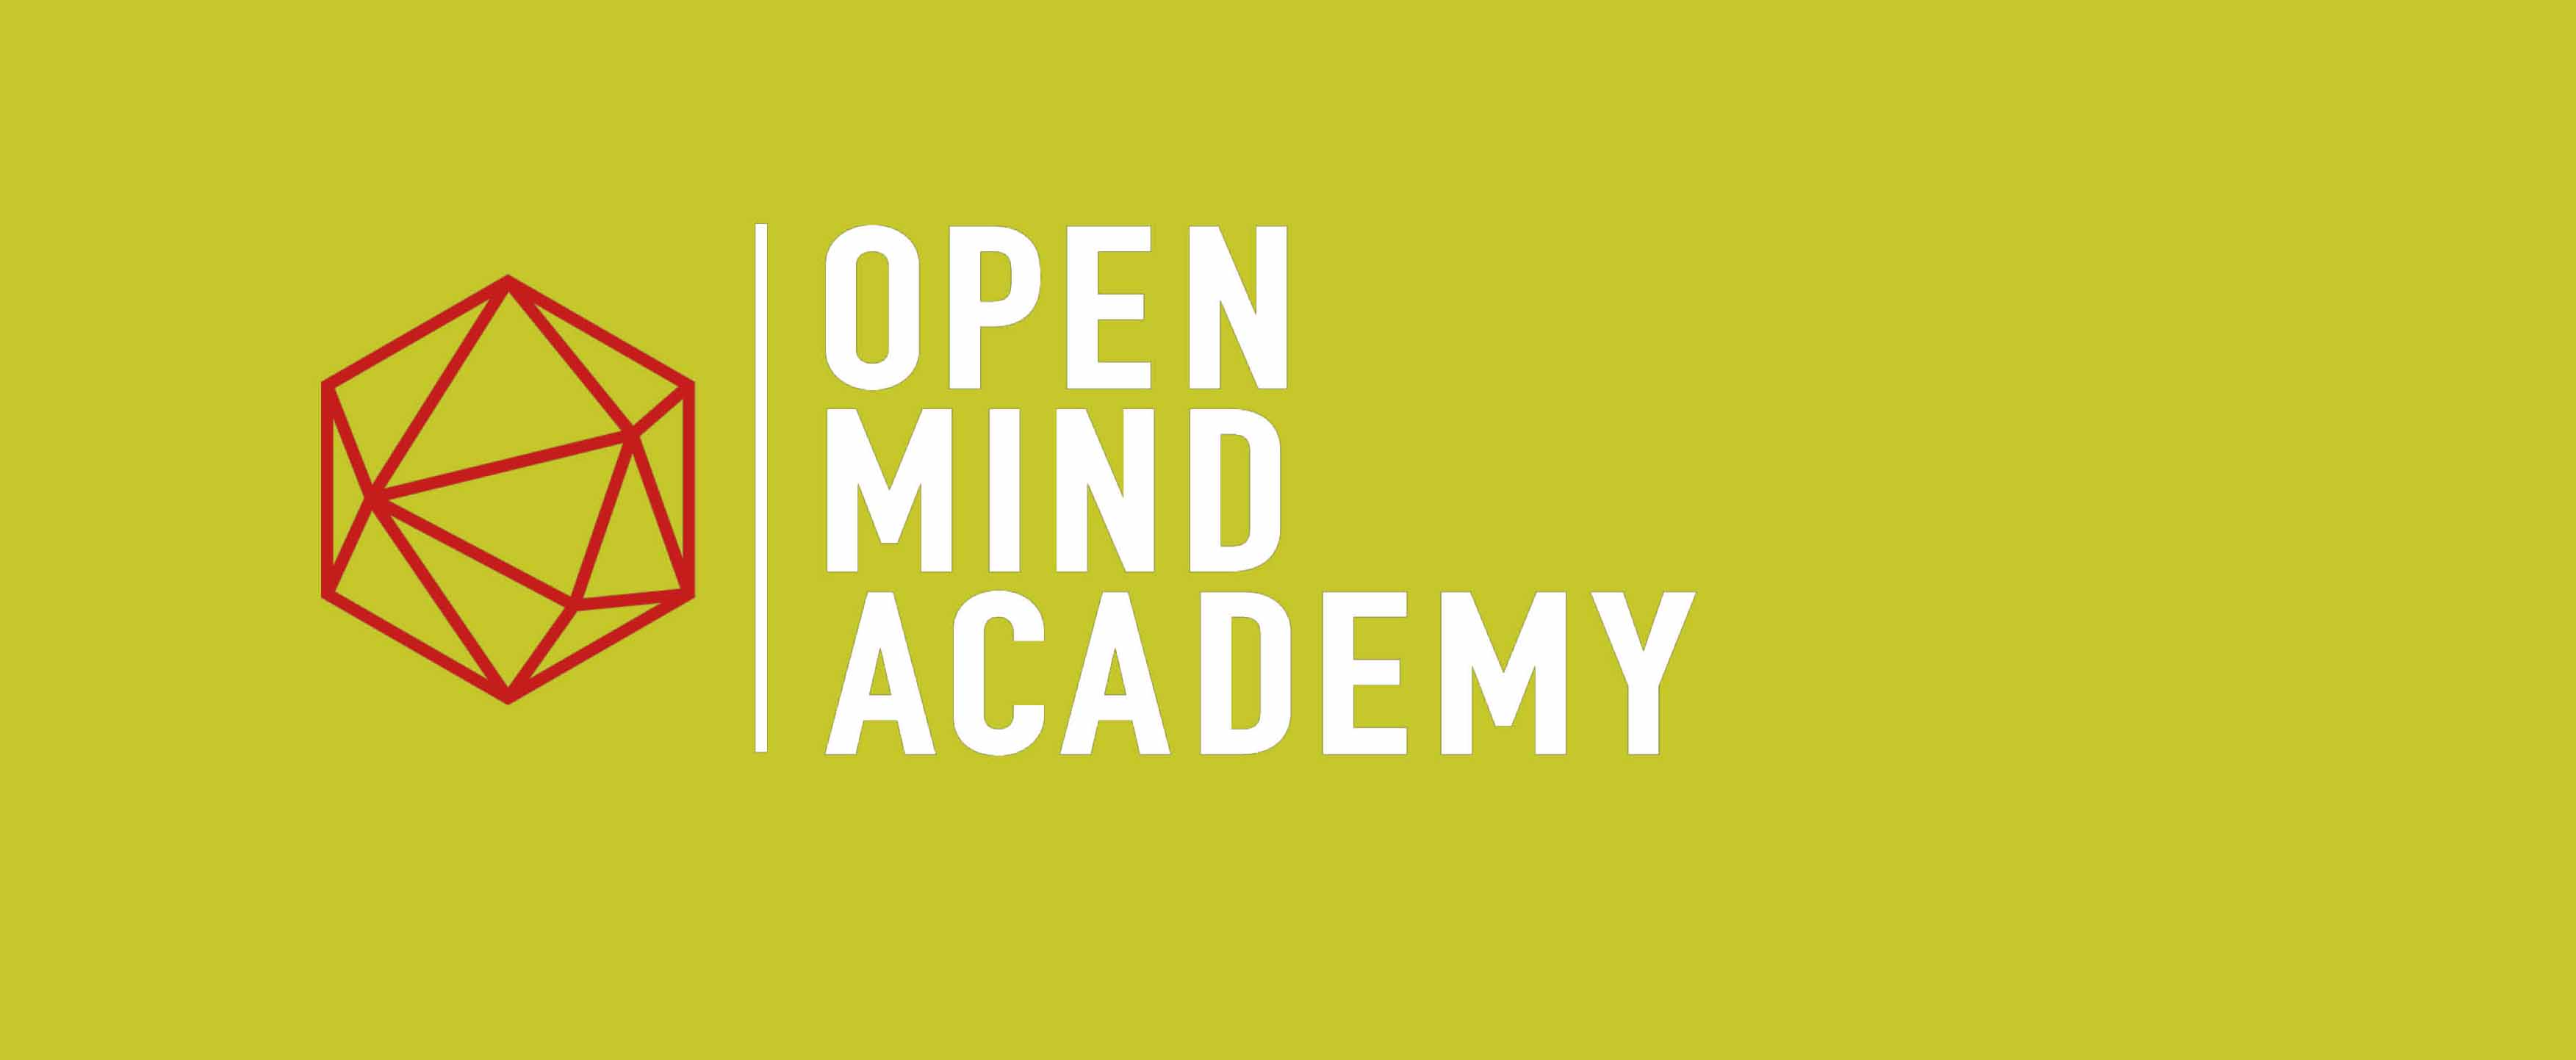 open mind academy